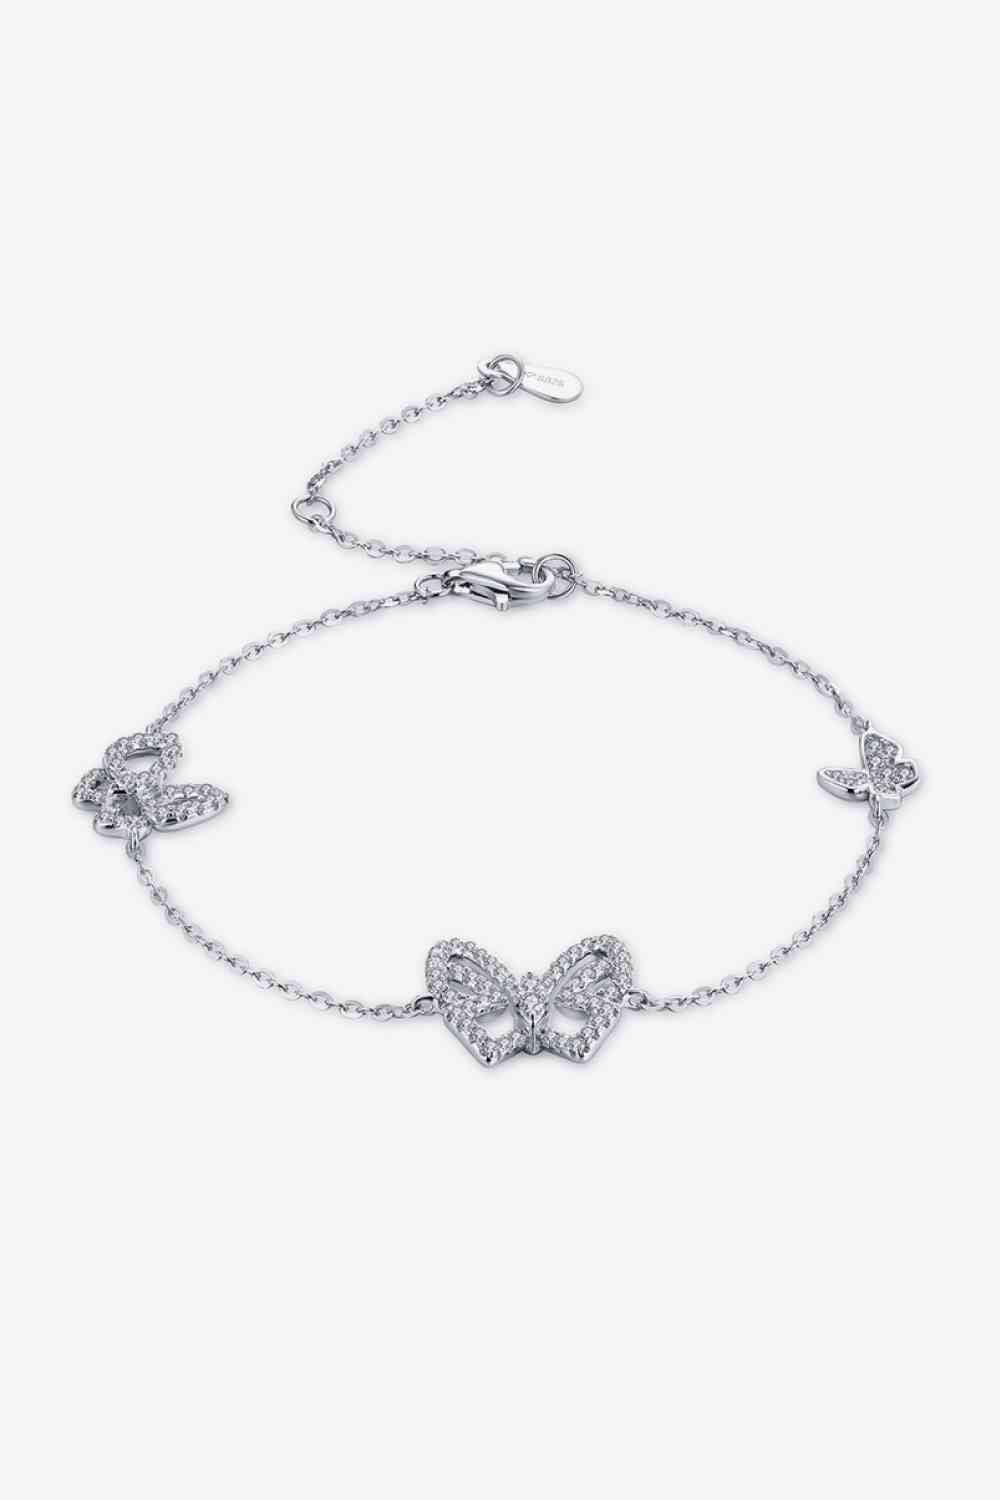 a silver bracelet with two butterflies on it